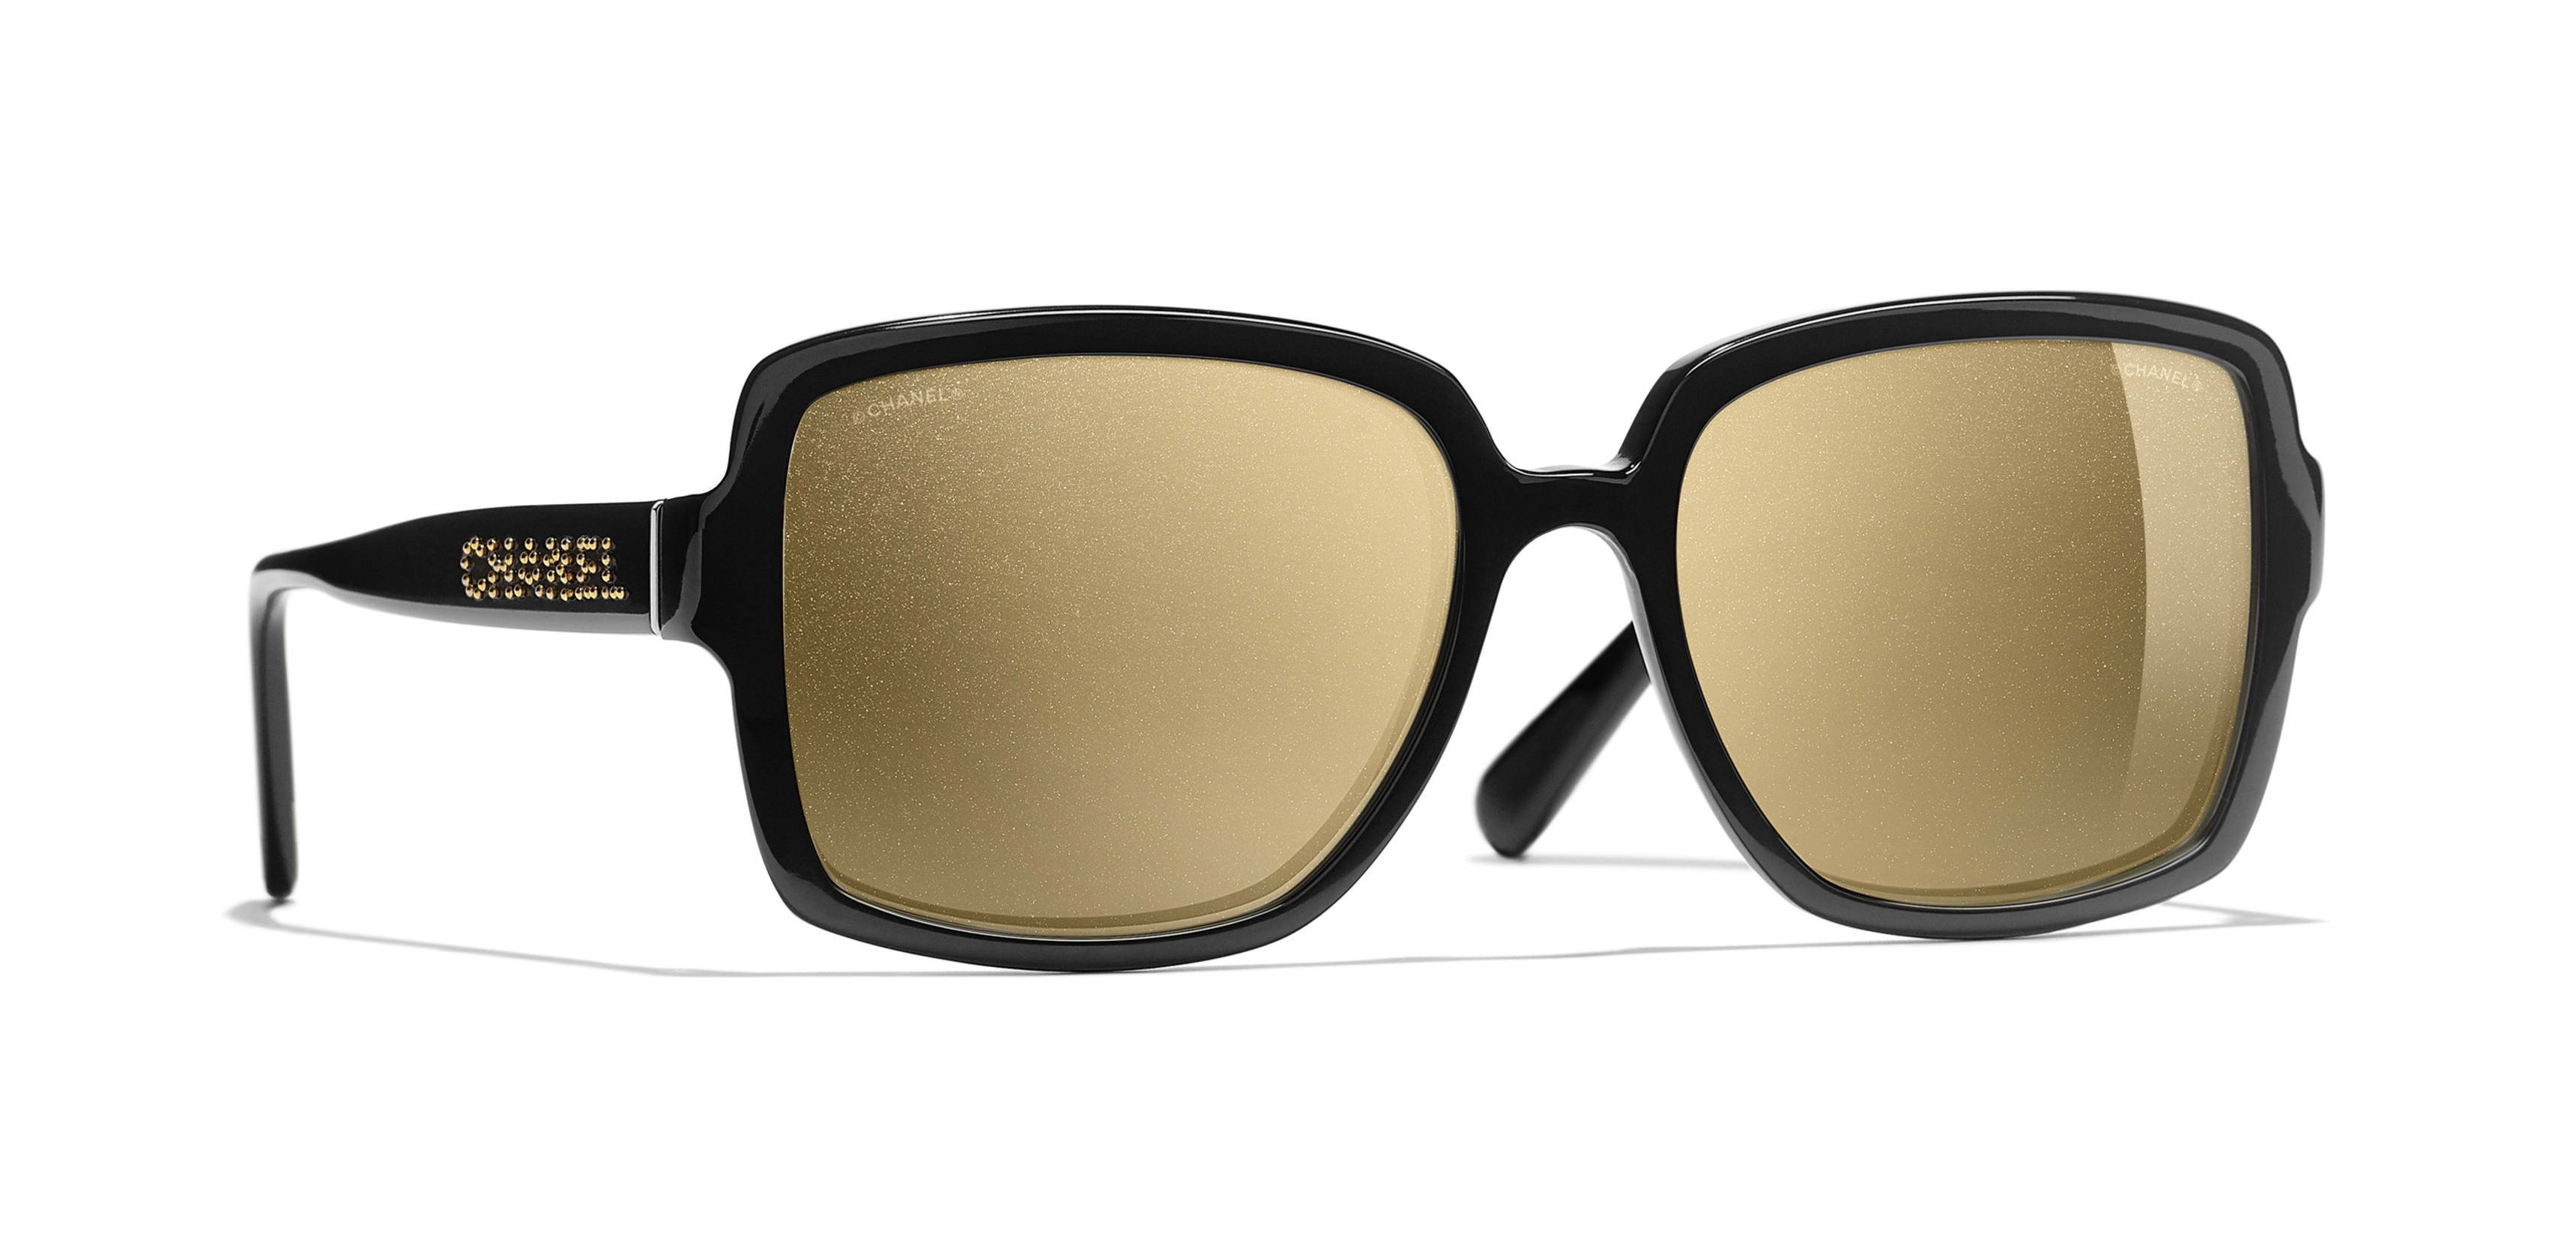 Chanel - Square Sunglasses - Black Gold Glitter - Chanel Eyewear - Avvenice